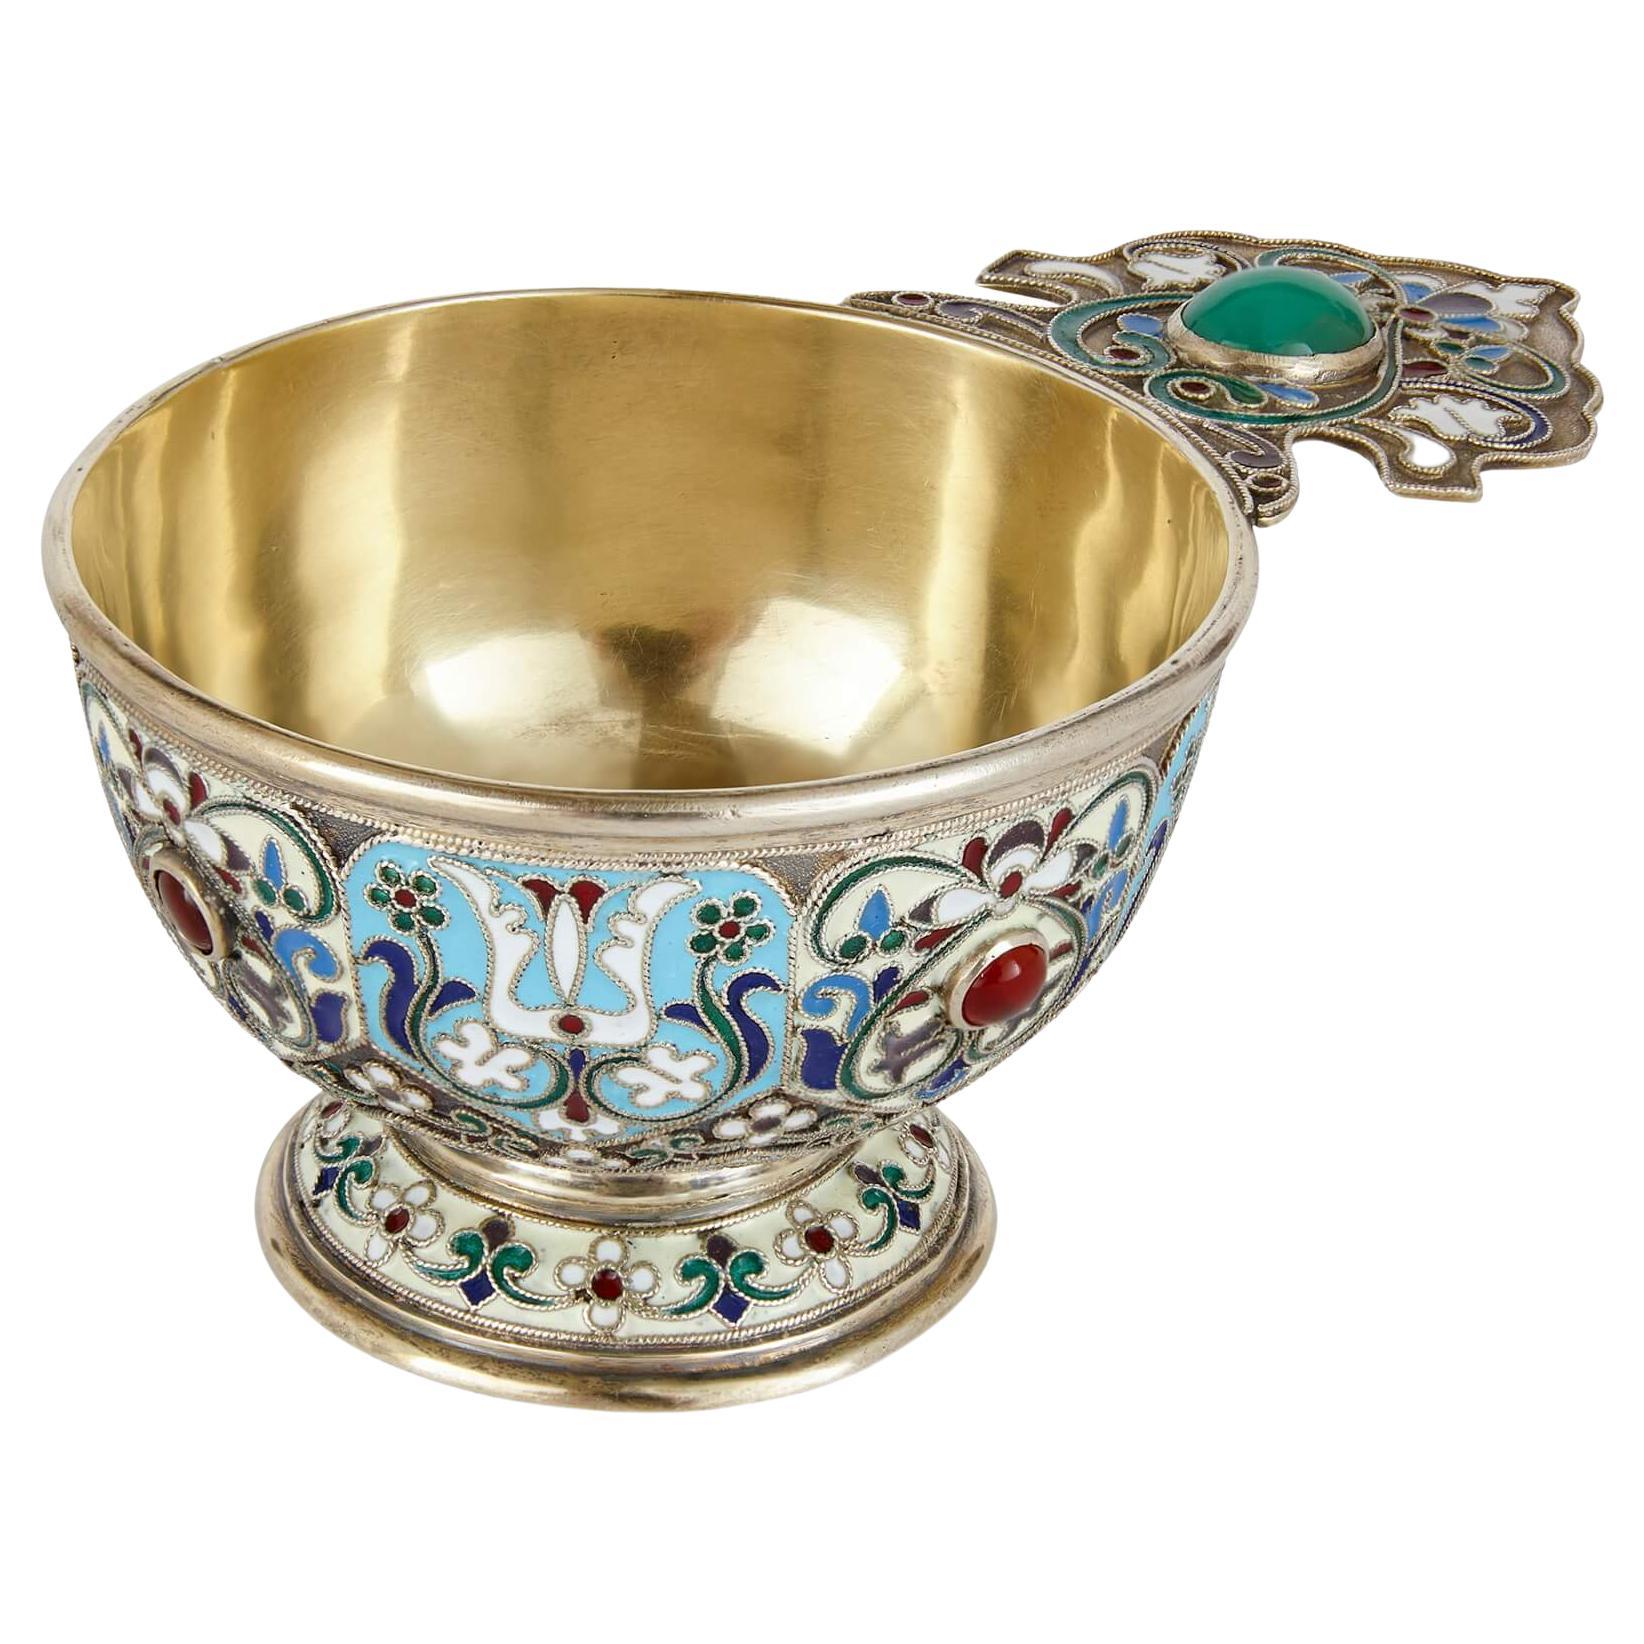 Silber vergoldet, mit Juwelen besetzt, Cloisonné-Emaille, russische Charka 